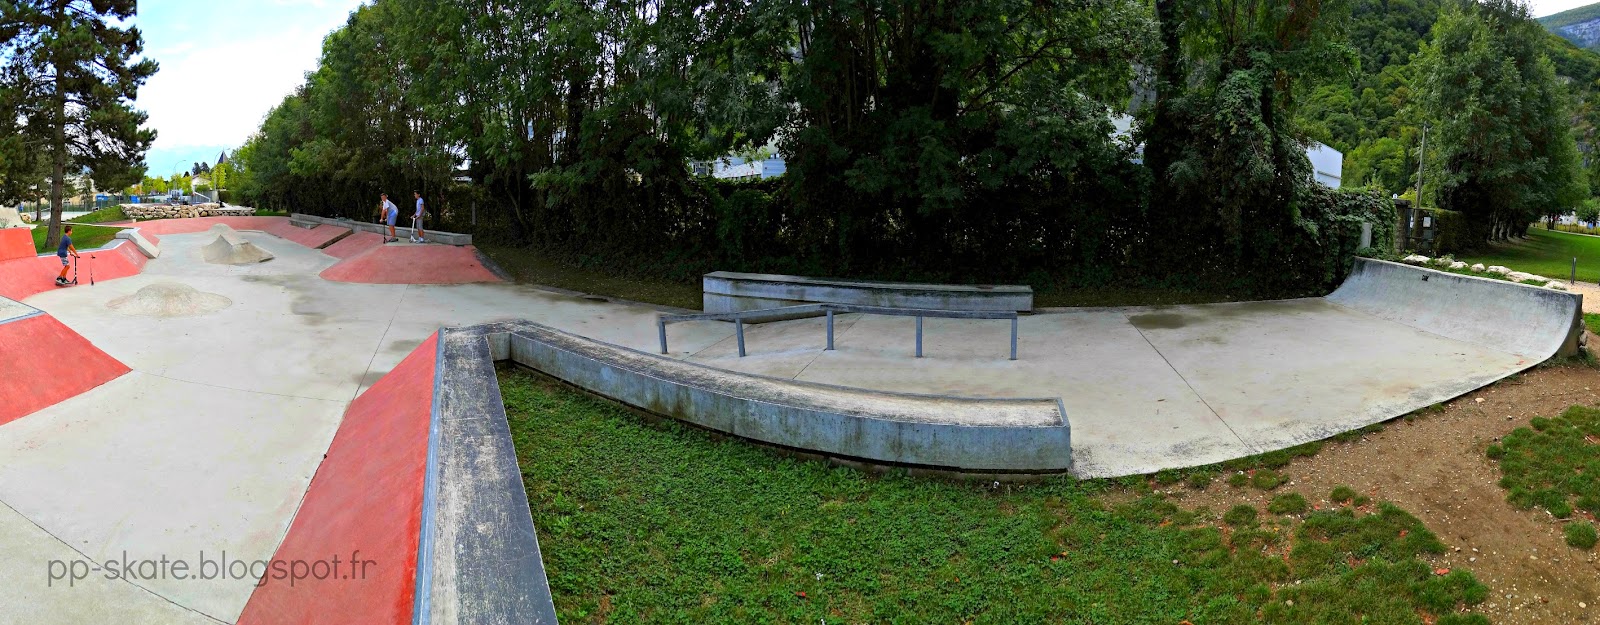 Skate park Fontaine